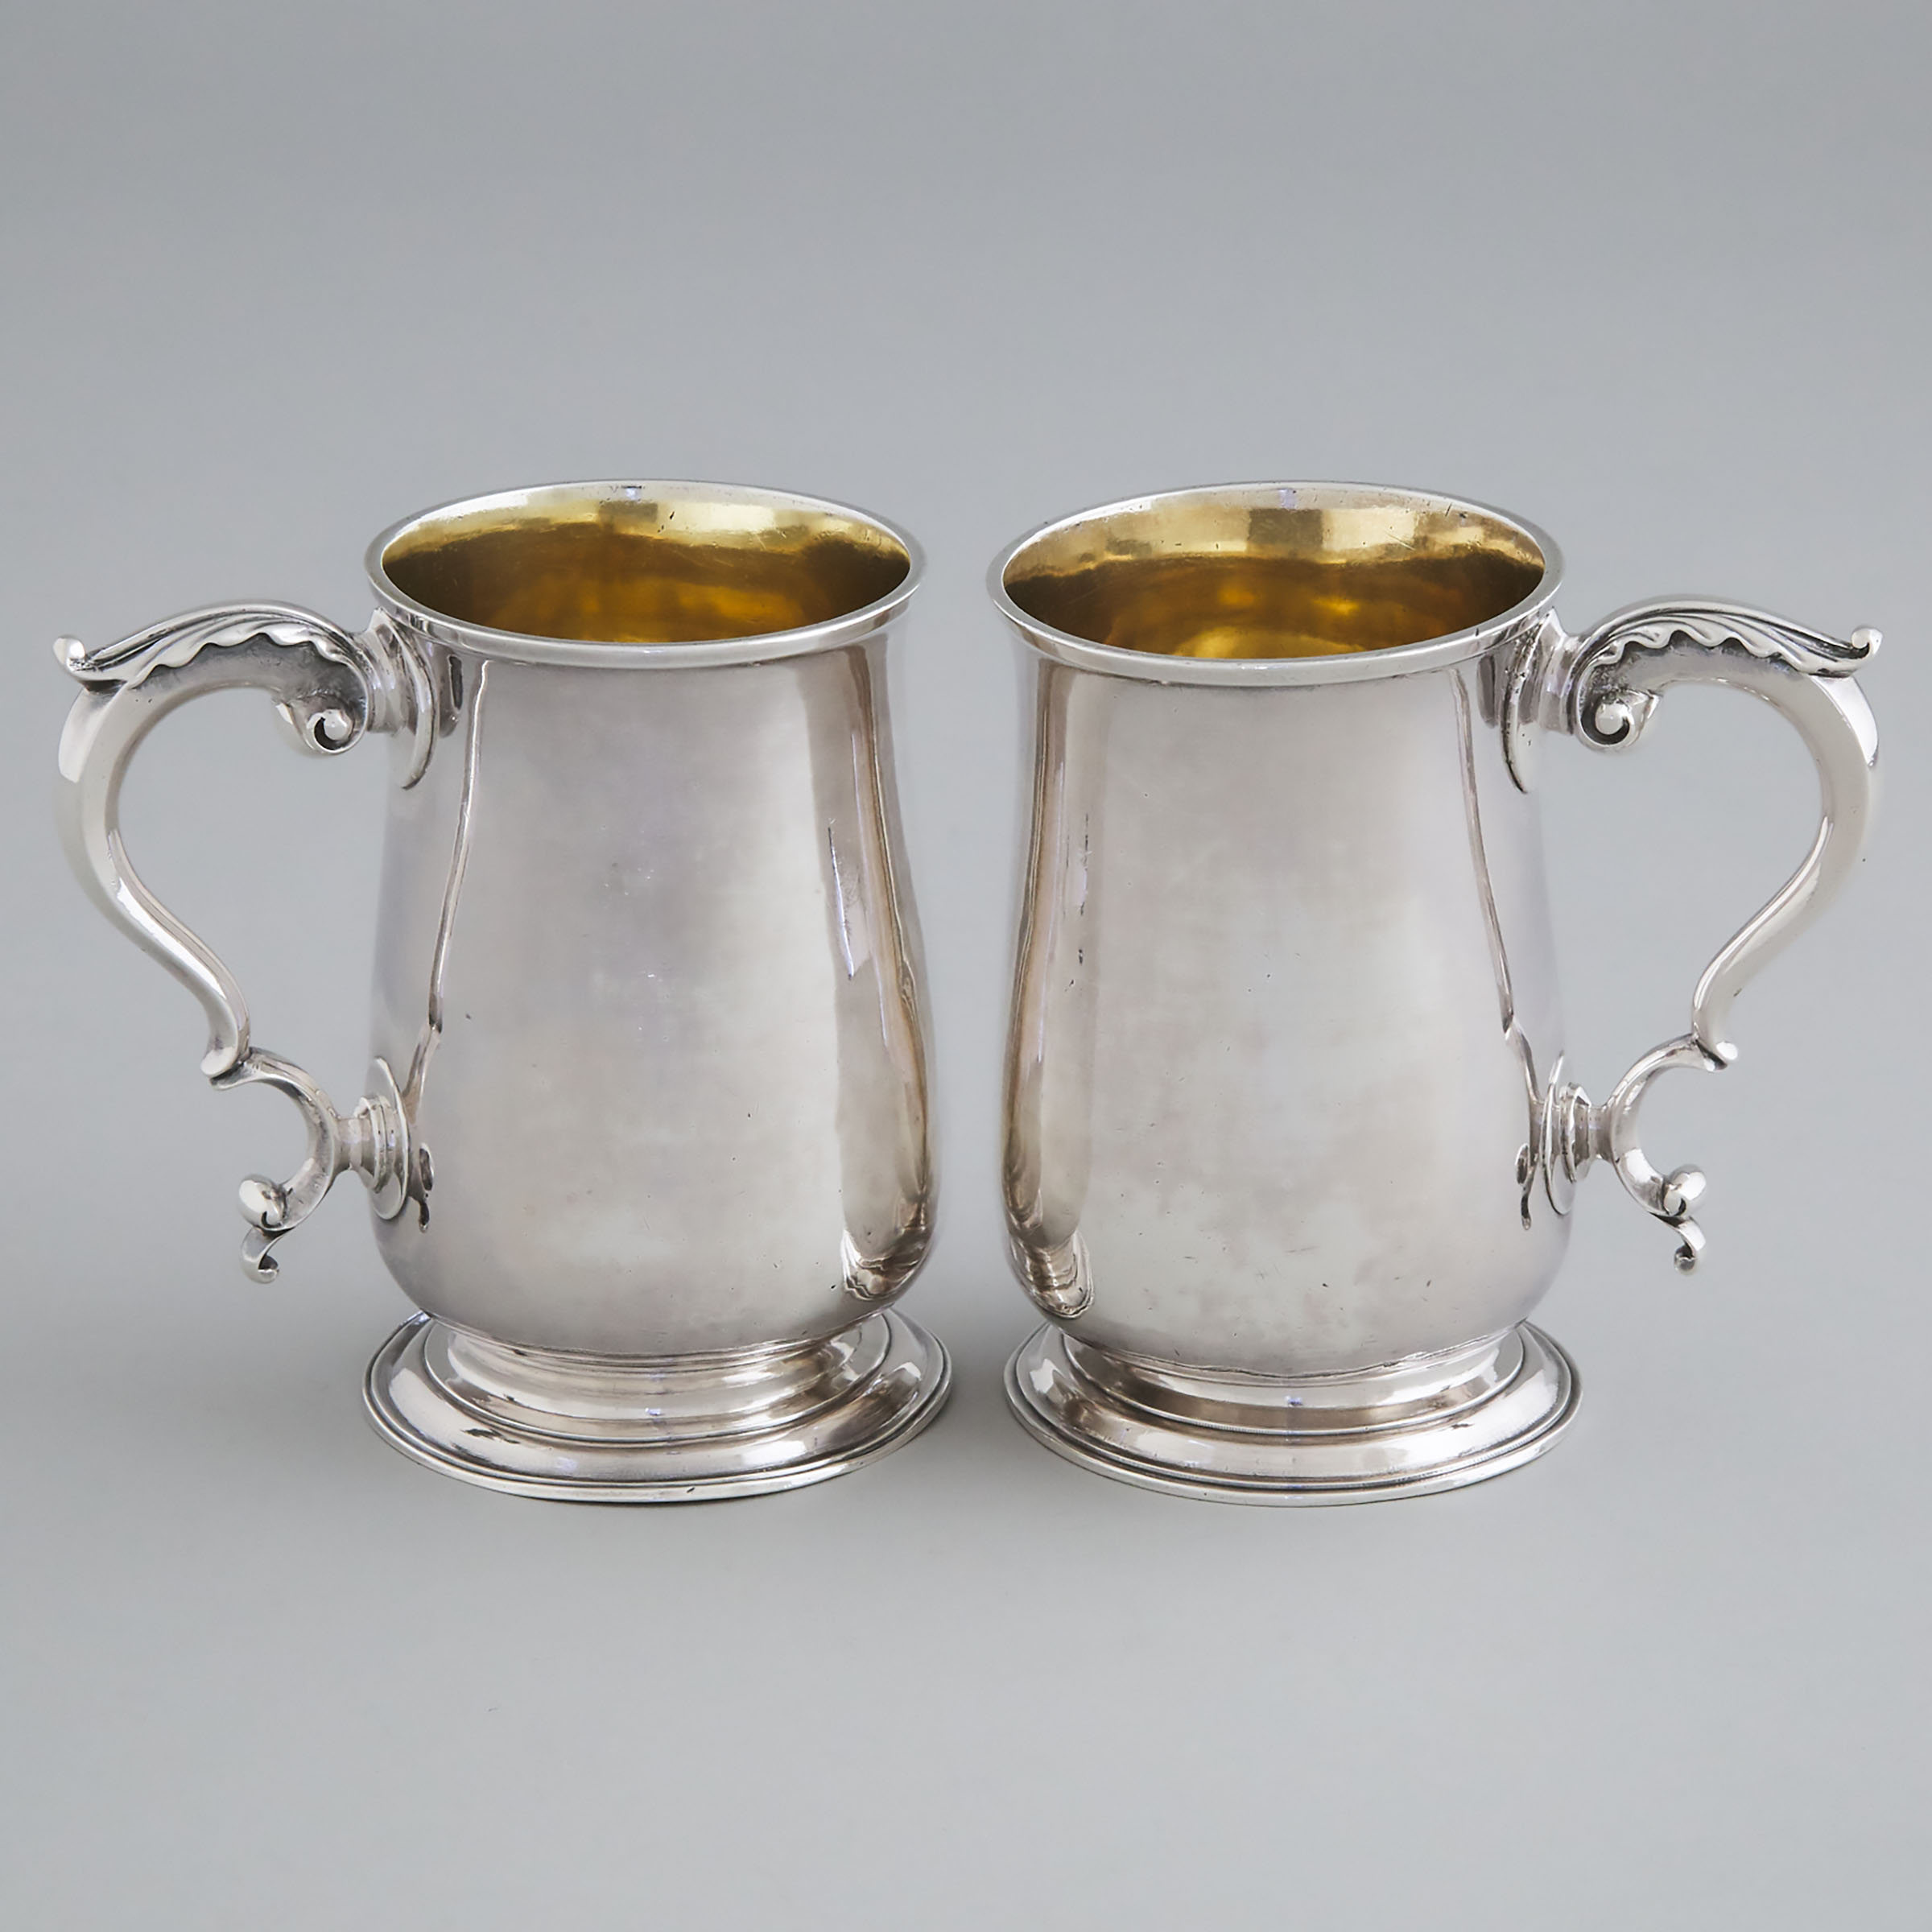 Pair of George III Silver Baluster Mugs, Thomas Wallis I, London, 1780